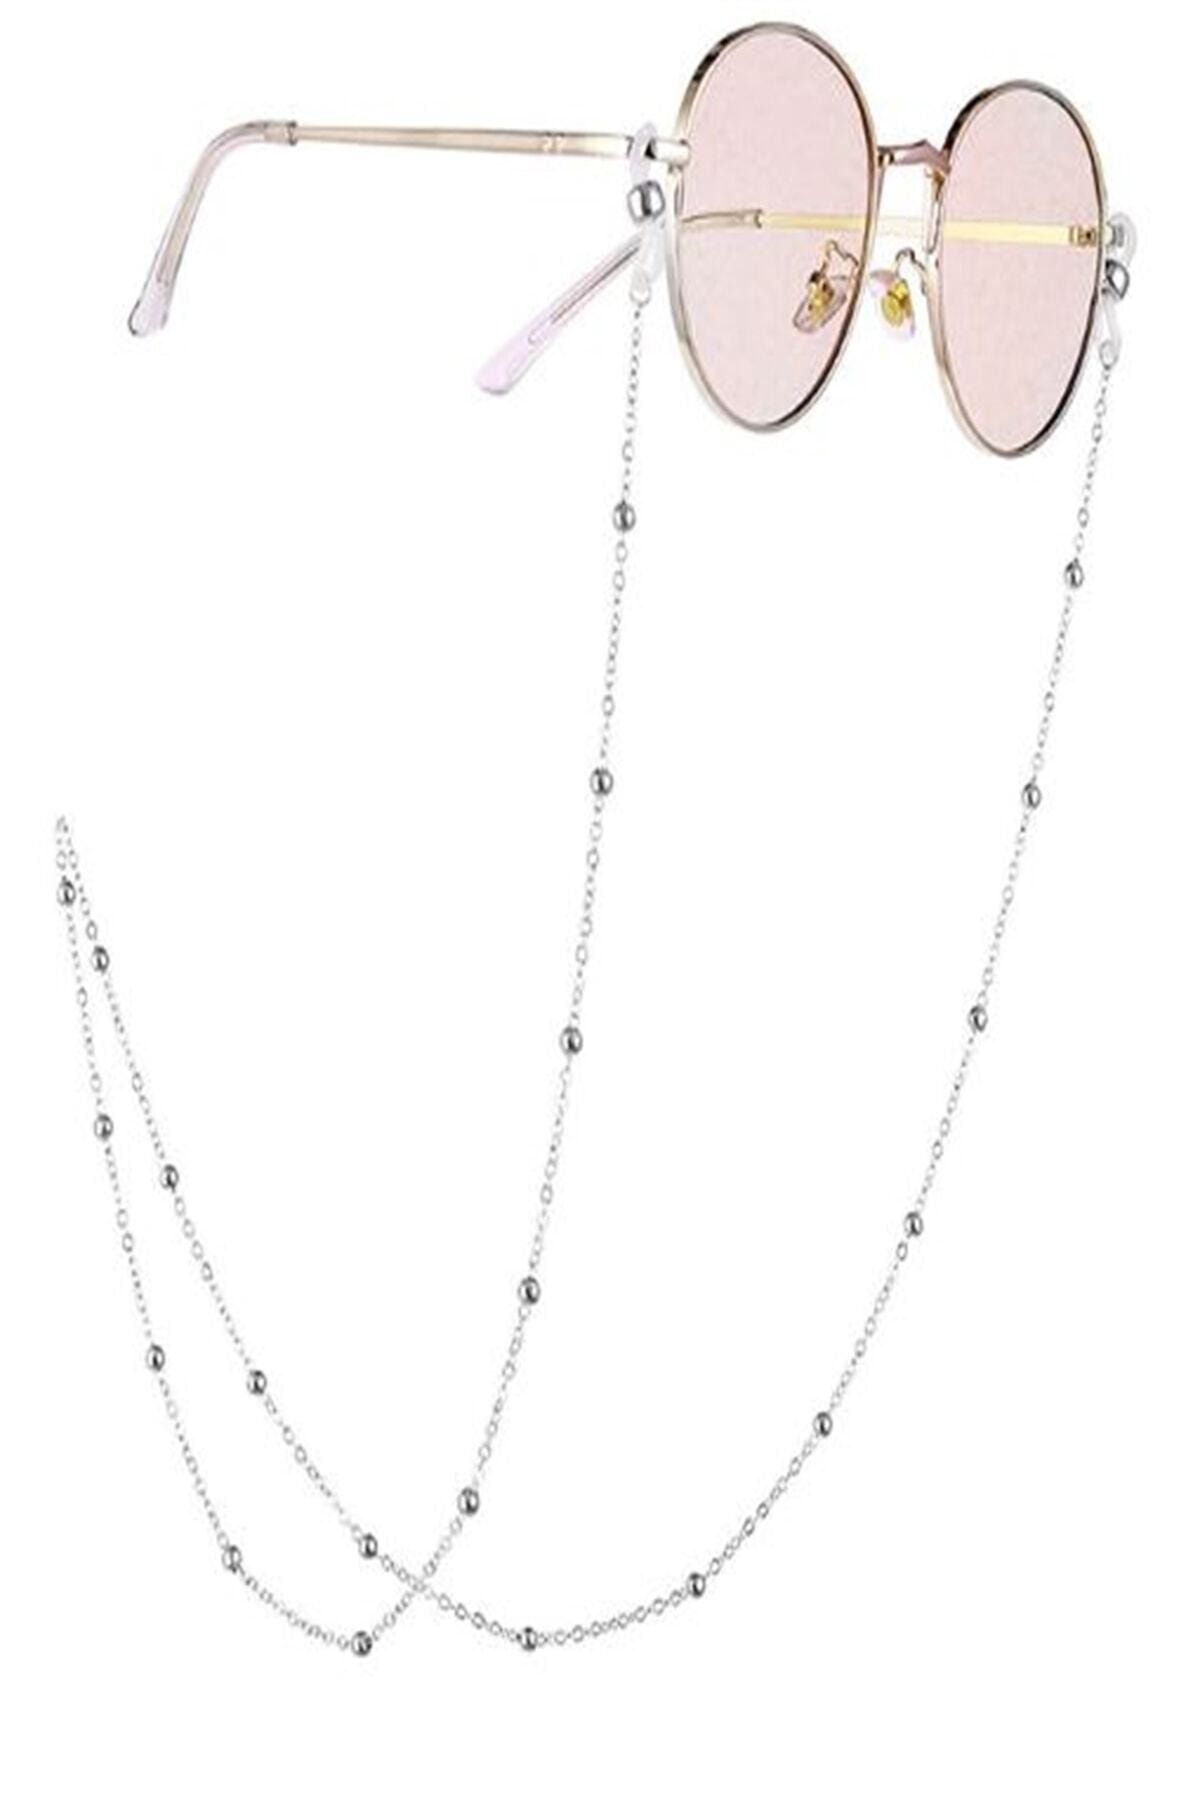 X-Lady Accessories Mini Top Boncuklu Stylish Trend Gözlük Zinciri - Gözlük Aksesuarı - Silver